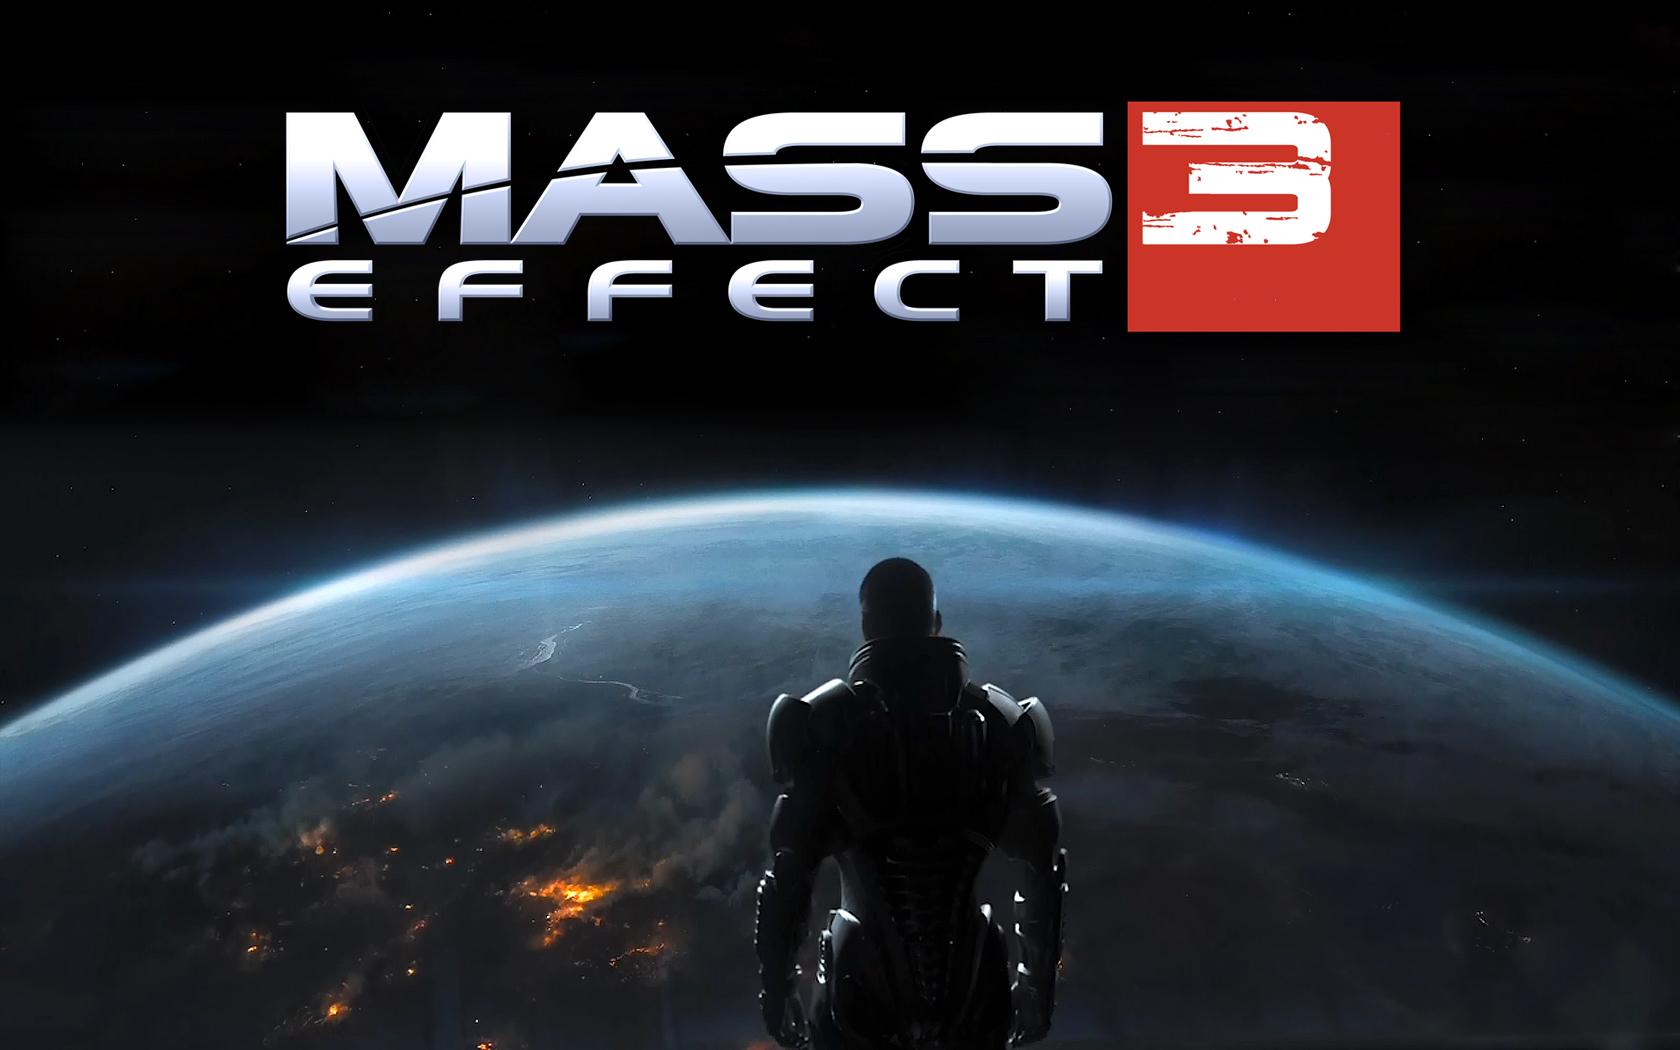 Mass Effect 3: All Origin, No Steam, Mum on 'Origin Spyware' Claims